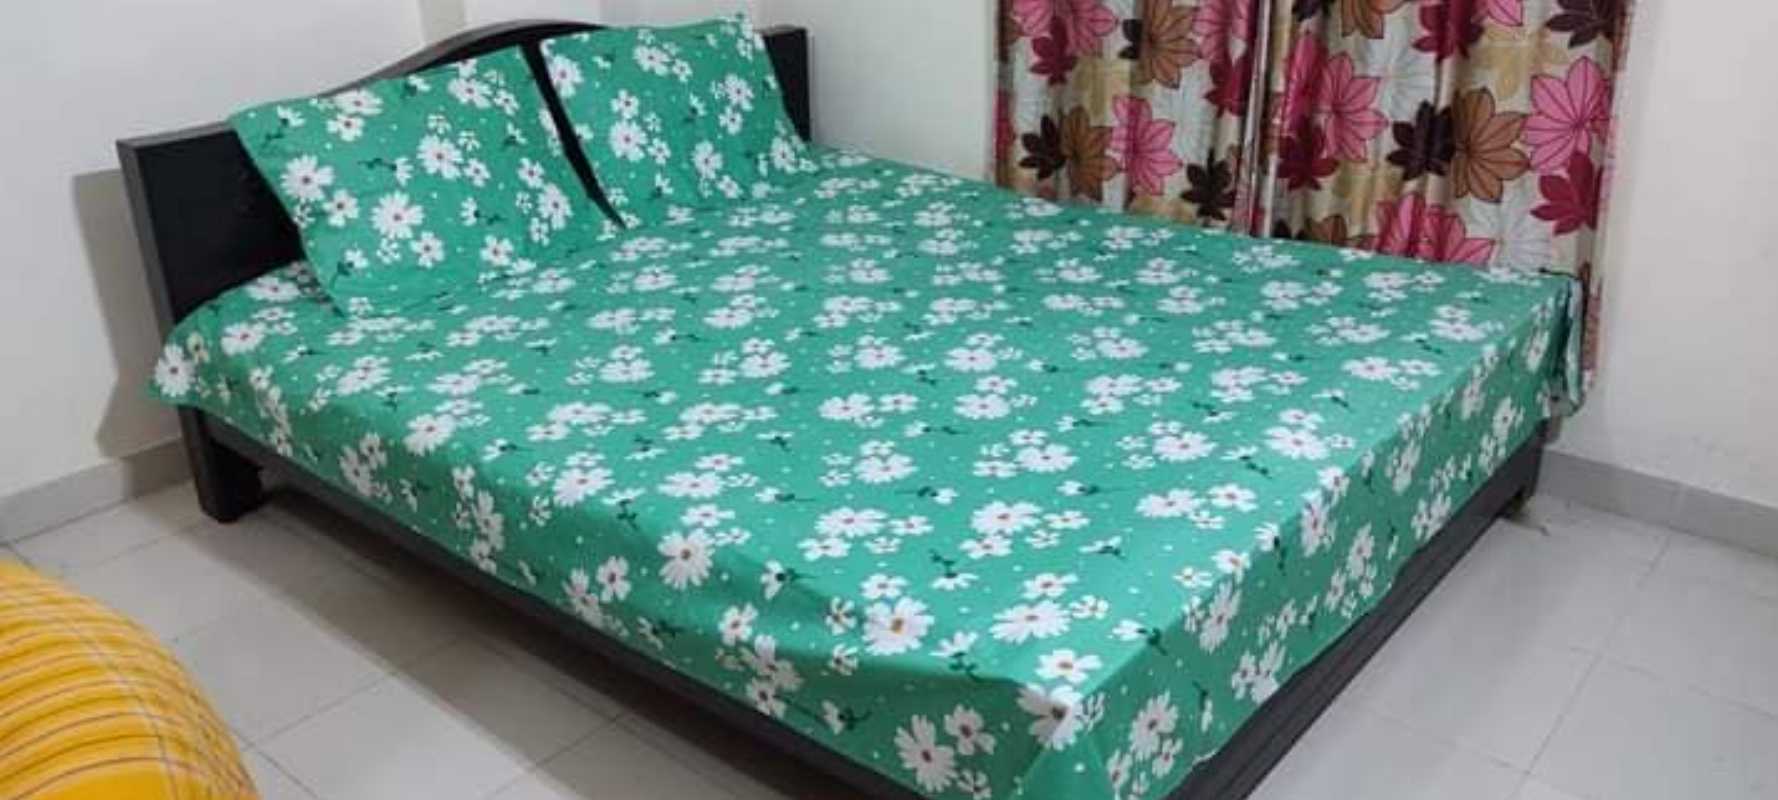 ,new bed sheet price in bangladesh,bed sheet bangladesh,,bed sheet bangladesh,bangladeshi bed sheet,bed sheet,bed sheet price in bangladesh,bed sheet price in bd,bed sheet in bangladesh,new collectio